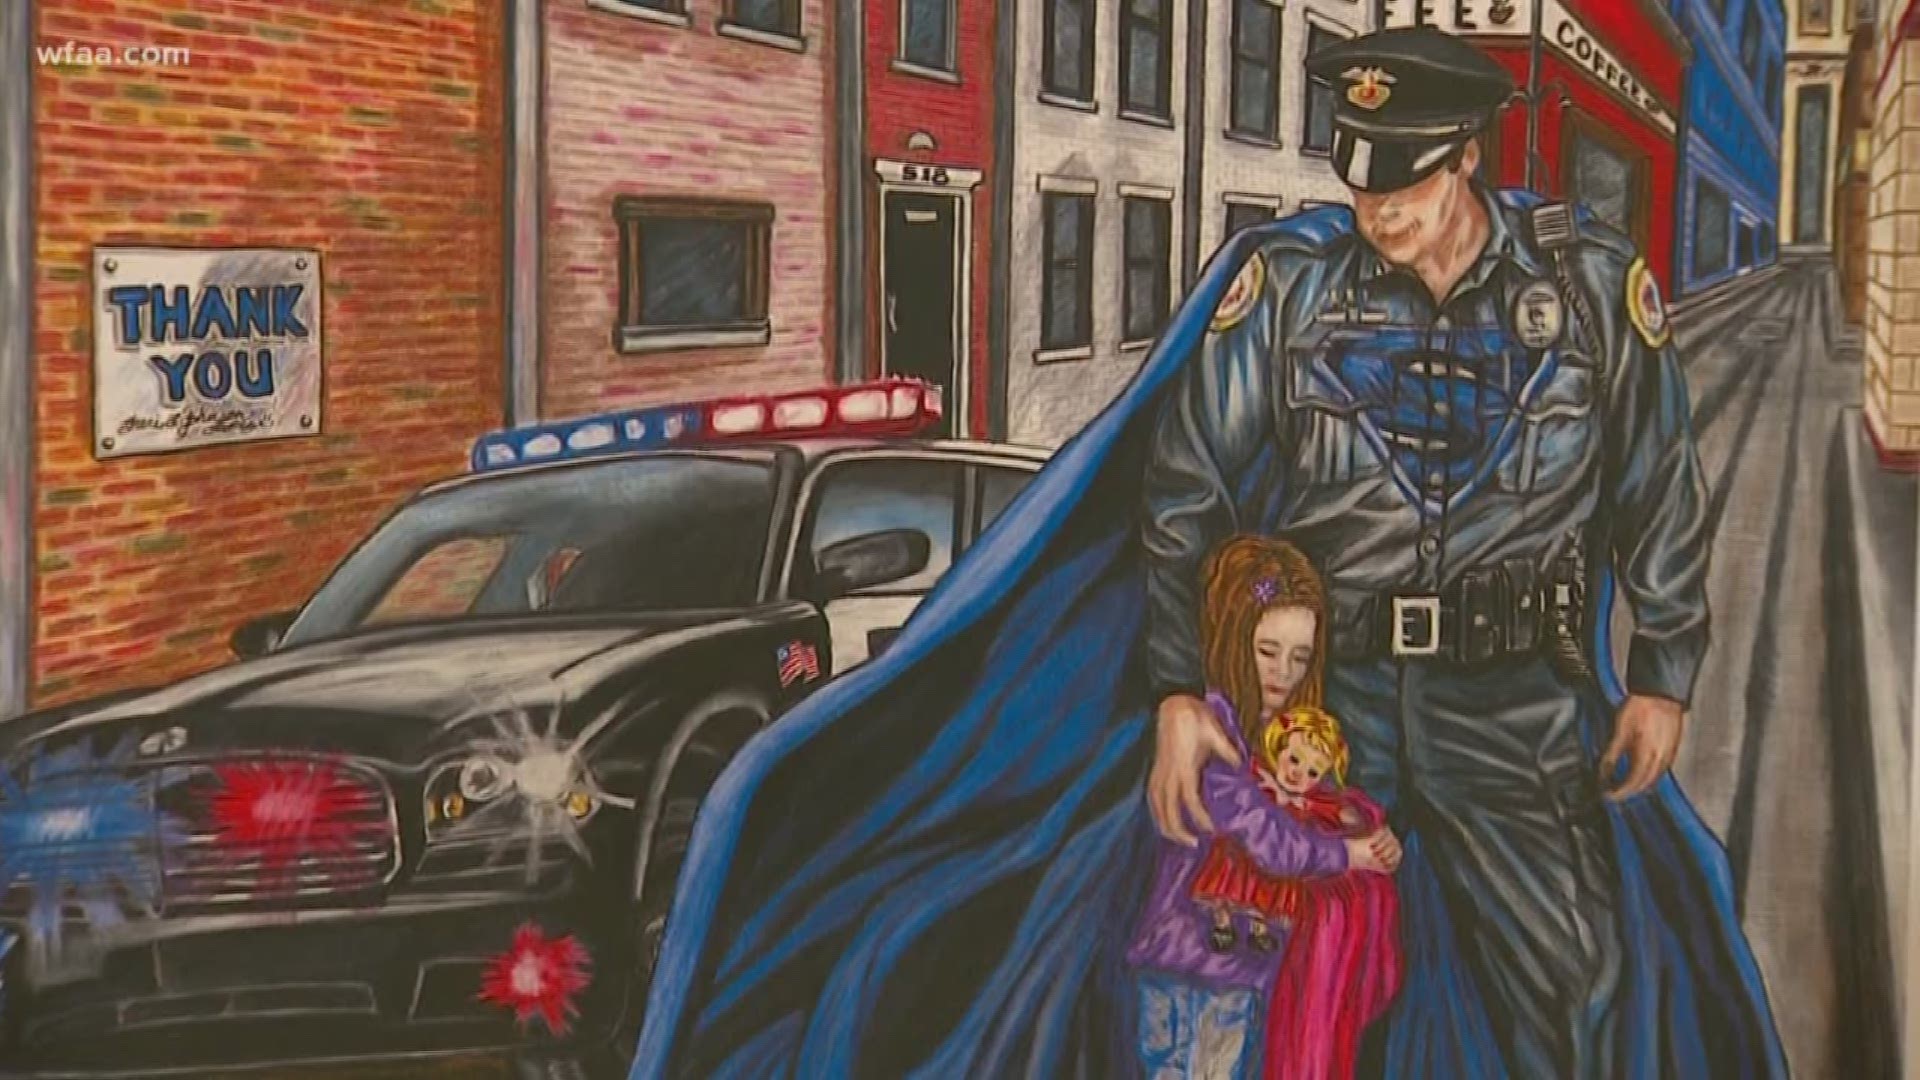 Single-mom muralist honors police, firefighters